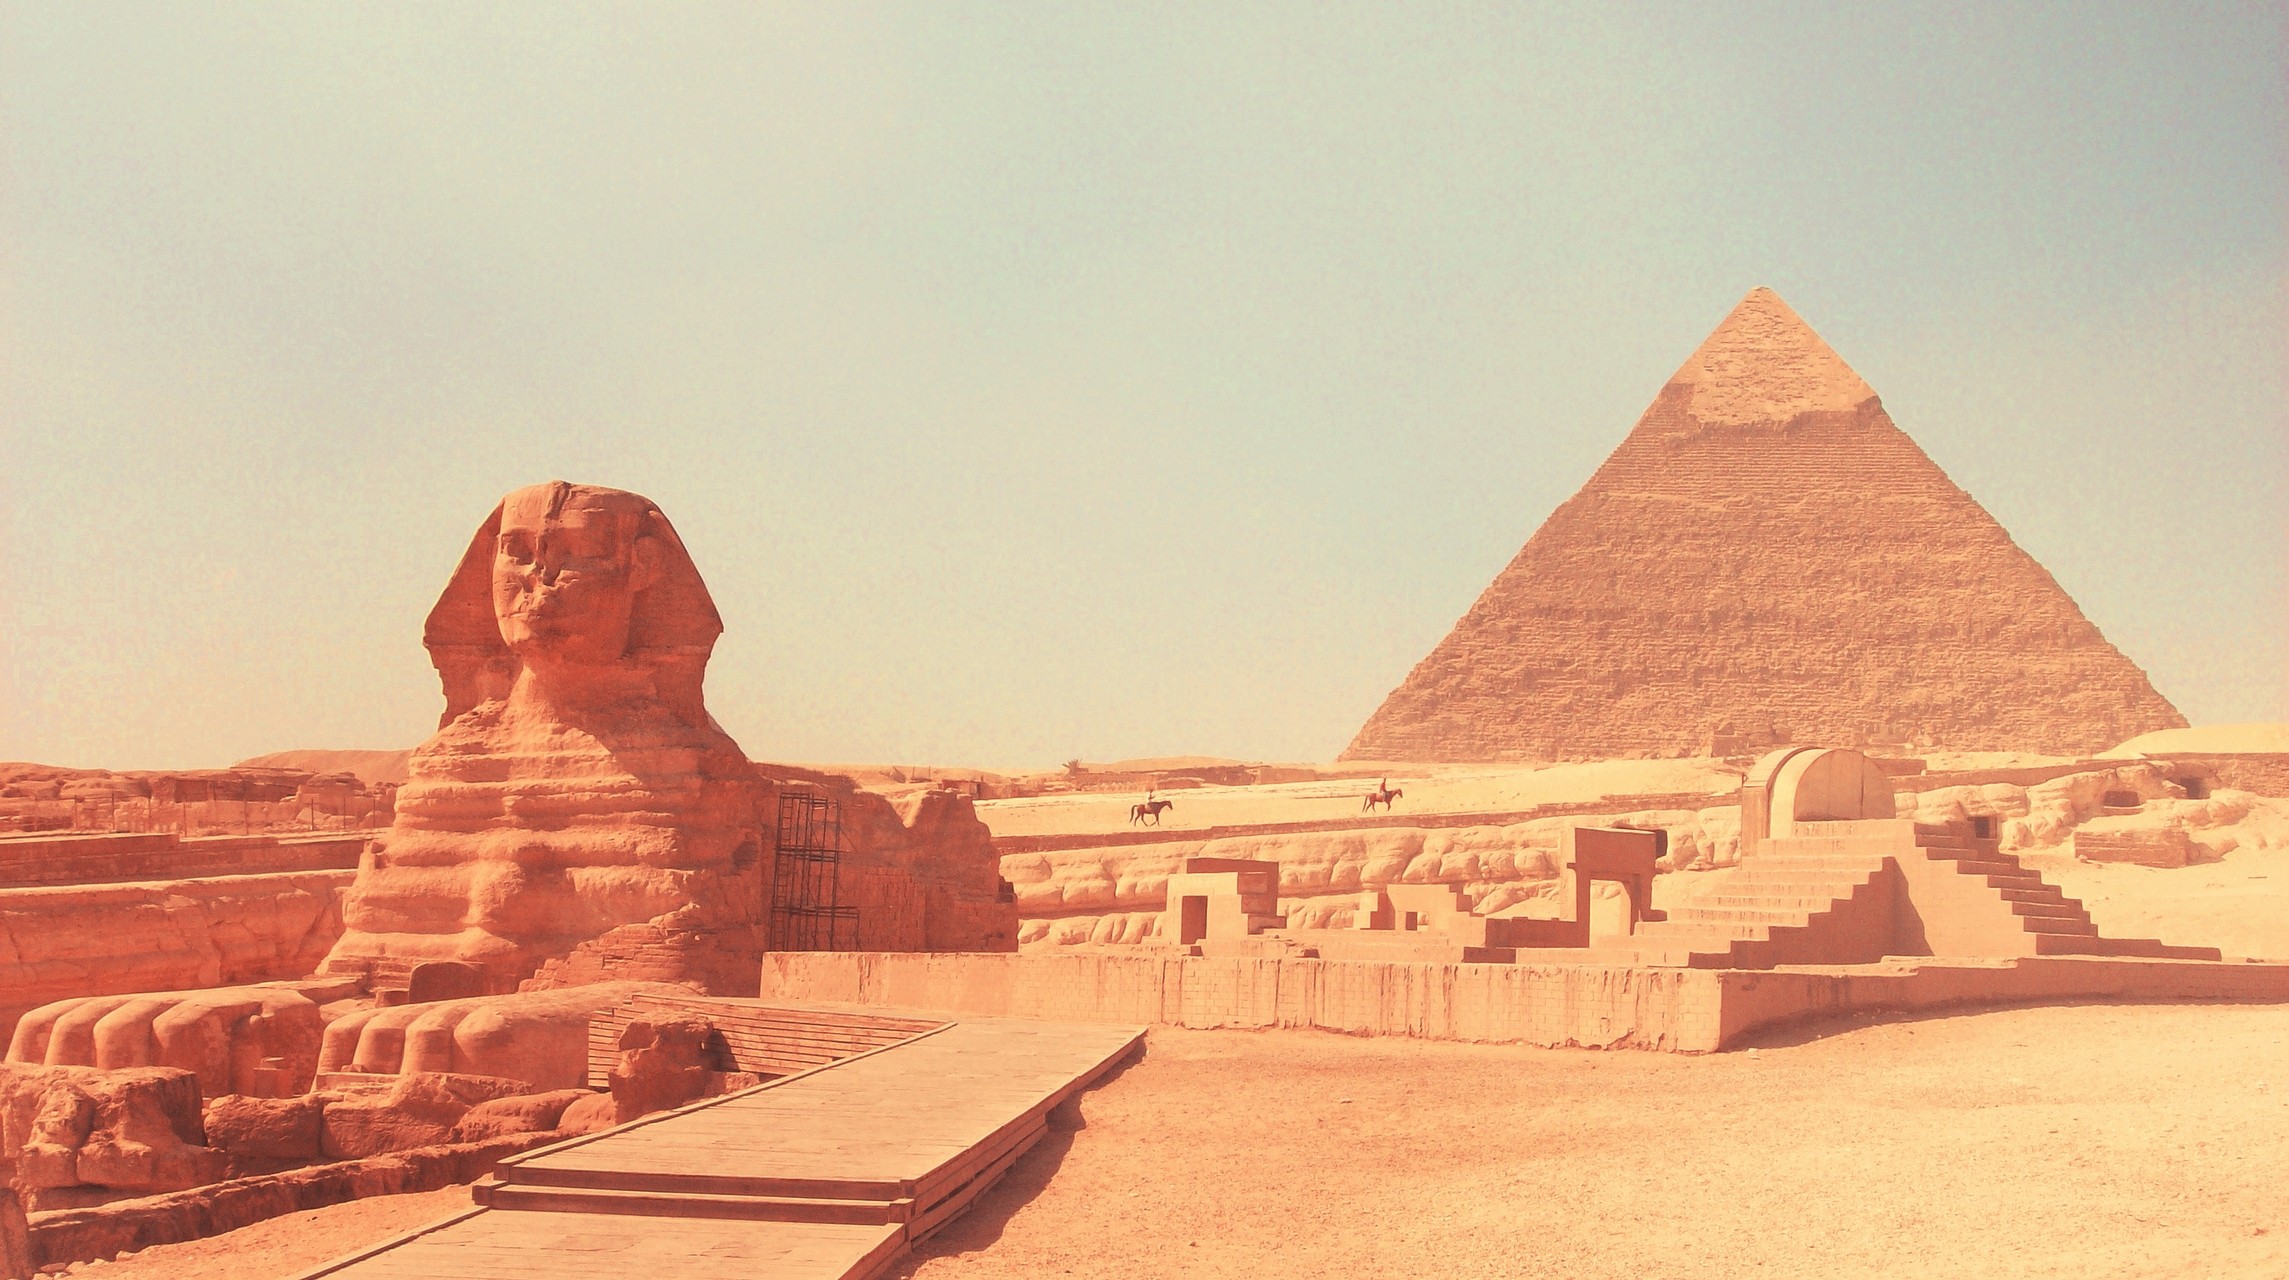 General 2289x1280 Egypt pyramid desert Pyramids of Giza Sphinx of Giza history ancient landmark World Heritage Site Africa